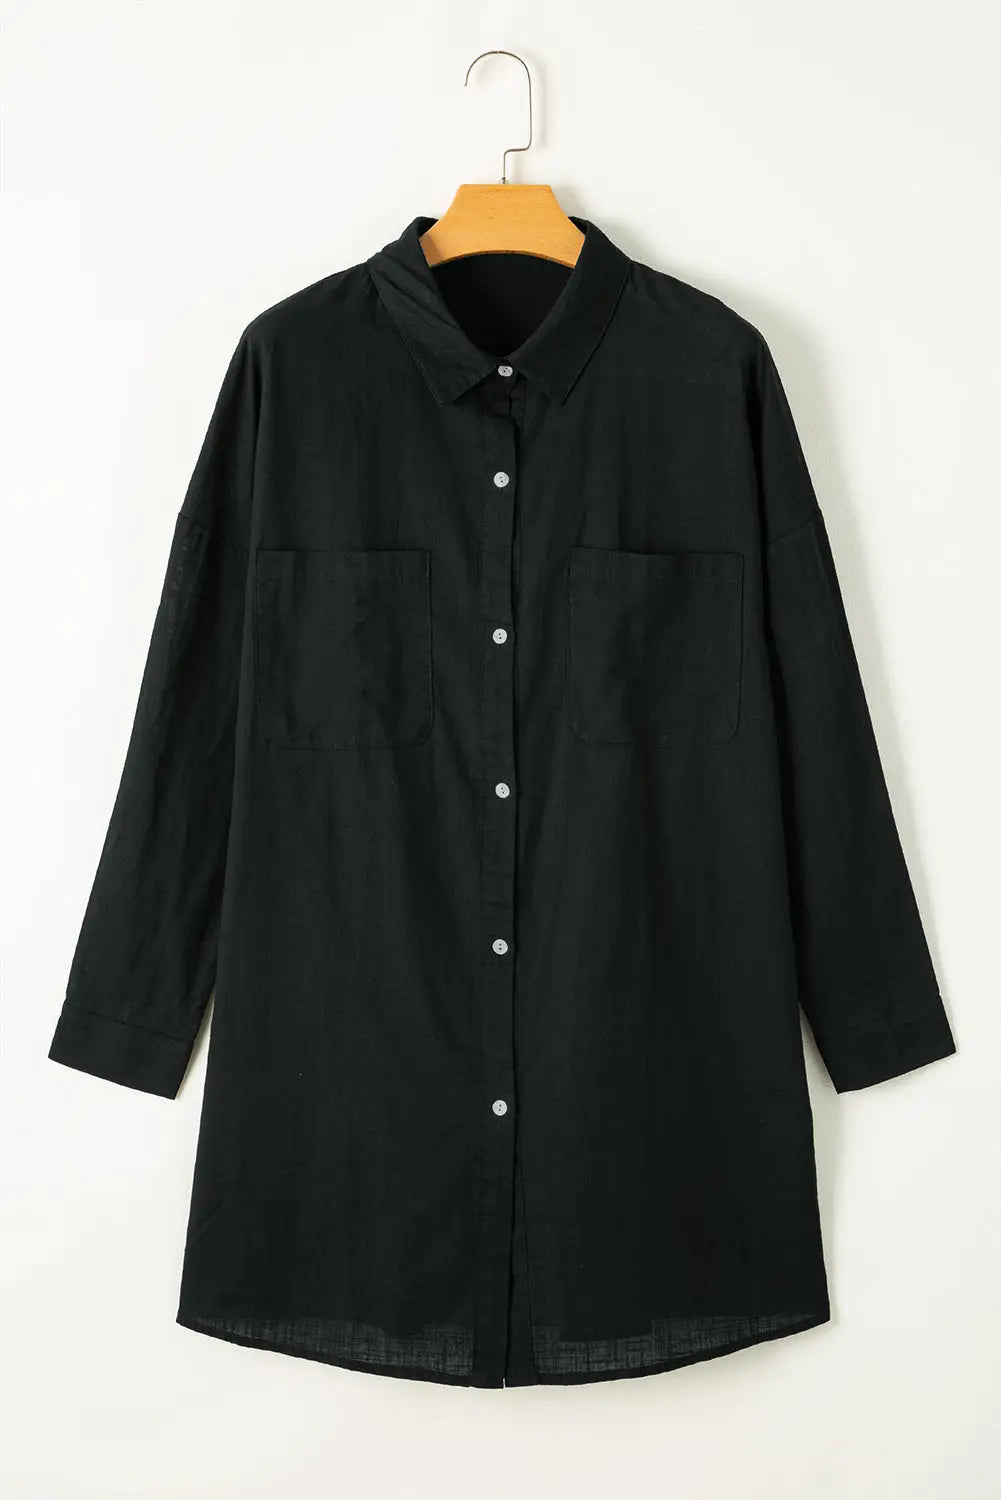 Black lightweight shirt style beach cover up - swimwear